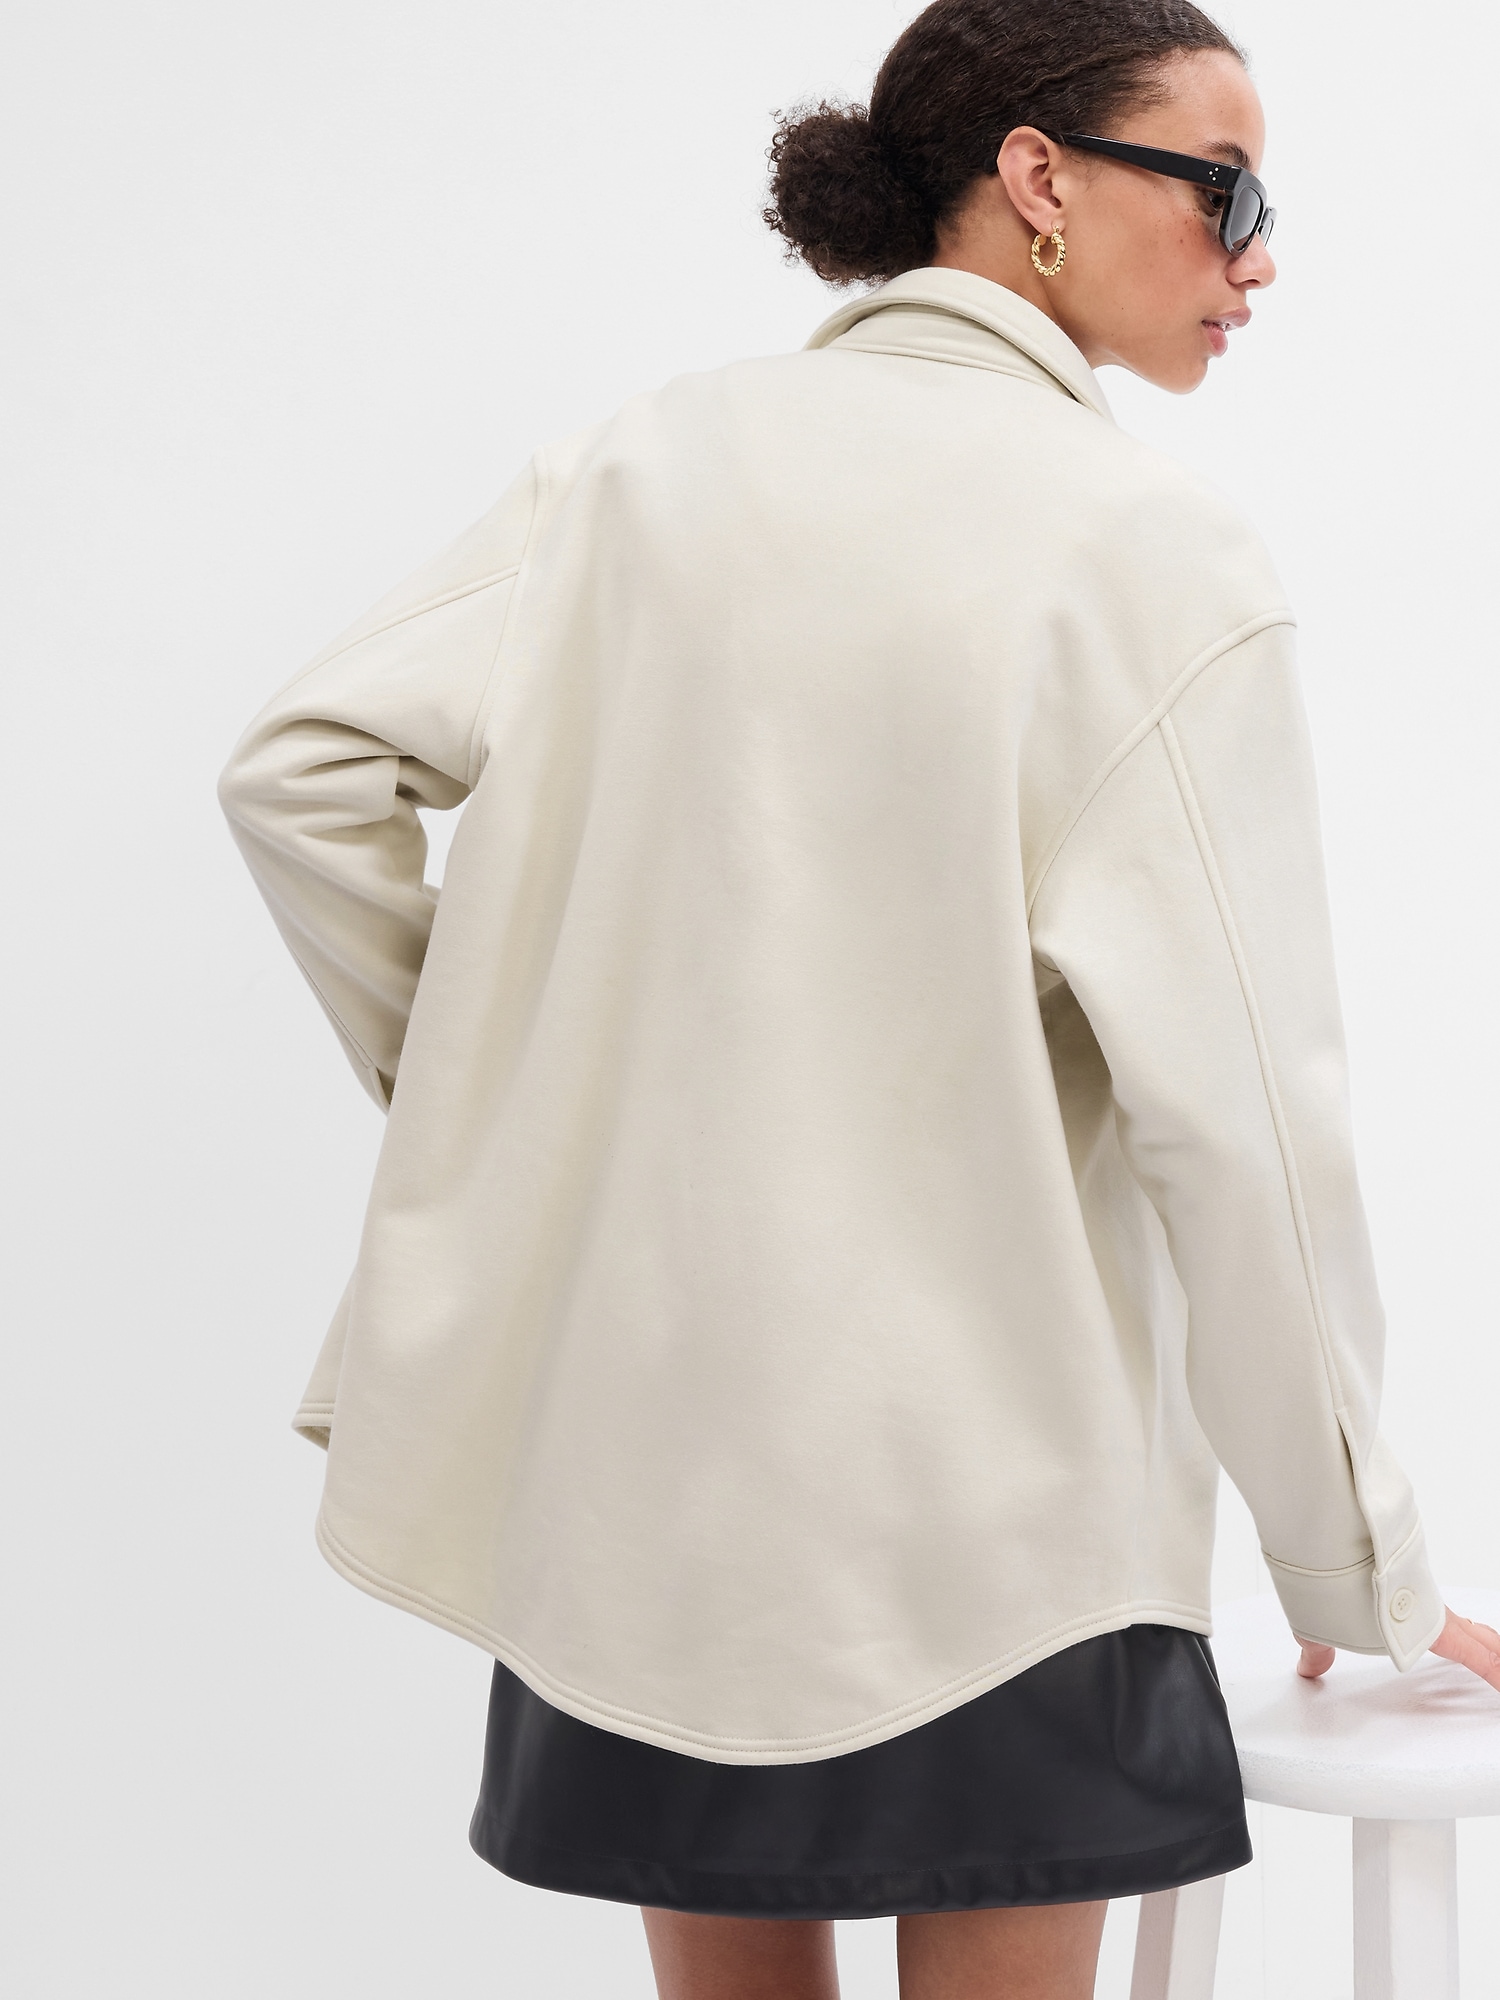 Fleece Shirt Jacket | Gap Factory